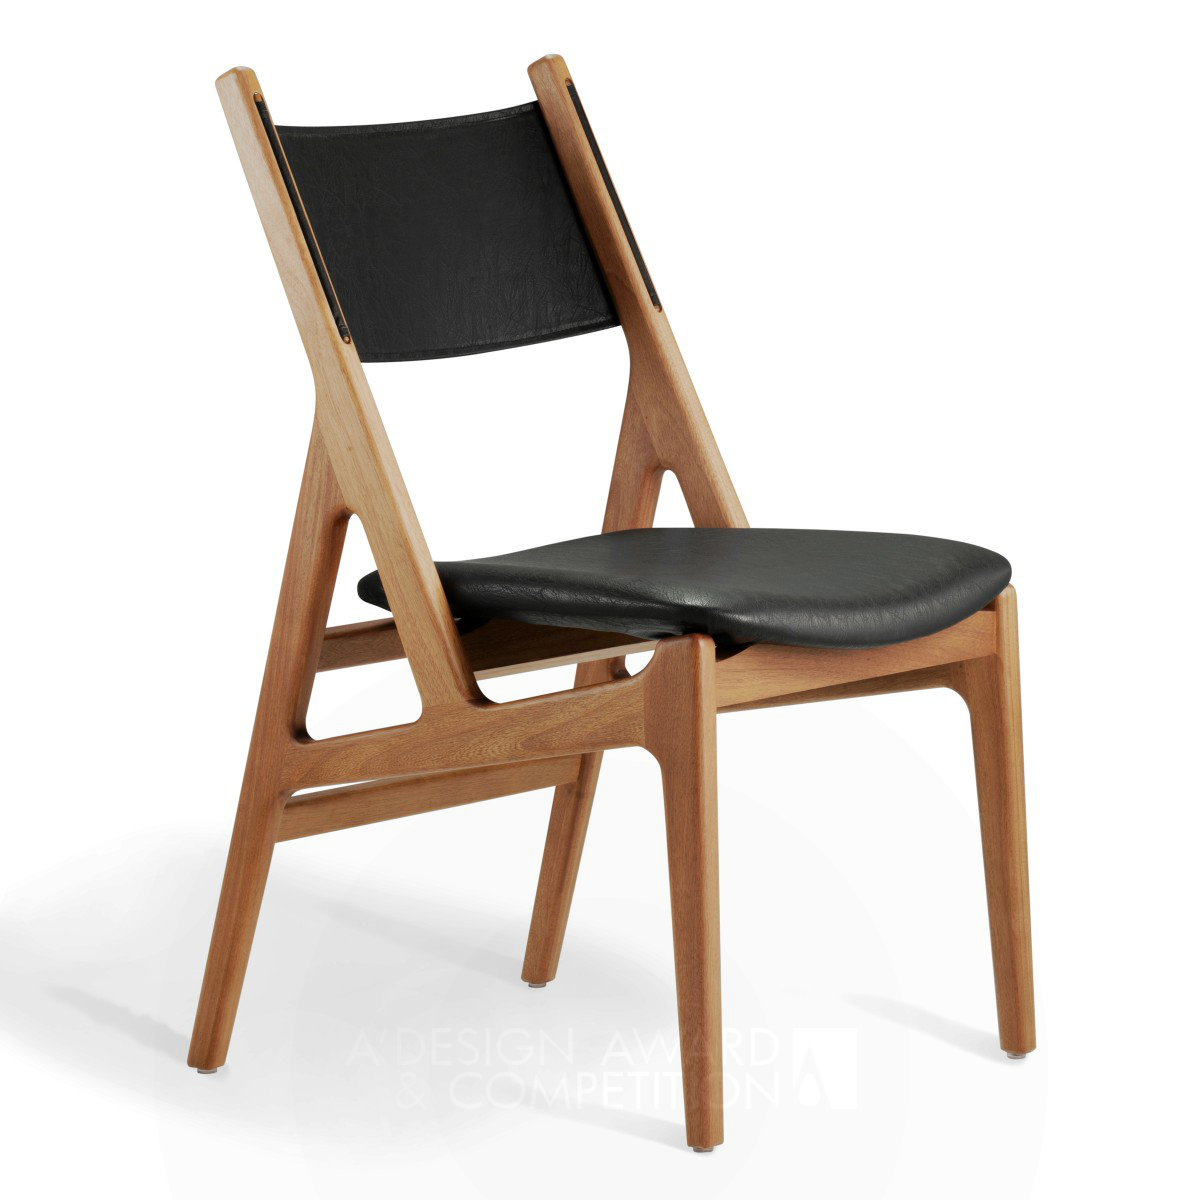 MORADA DECOR wins Bronze at the prestigious A' Furniture Design Award with Cinema Chair.